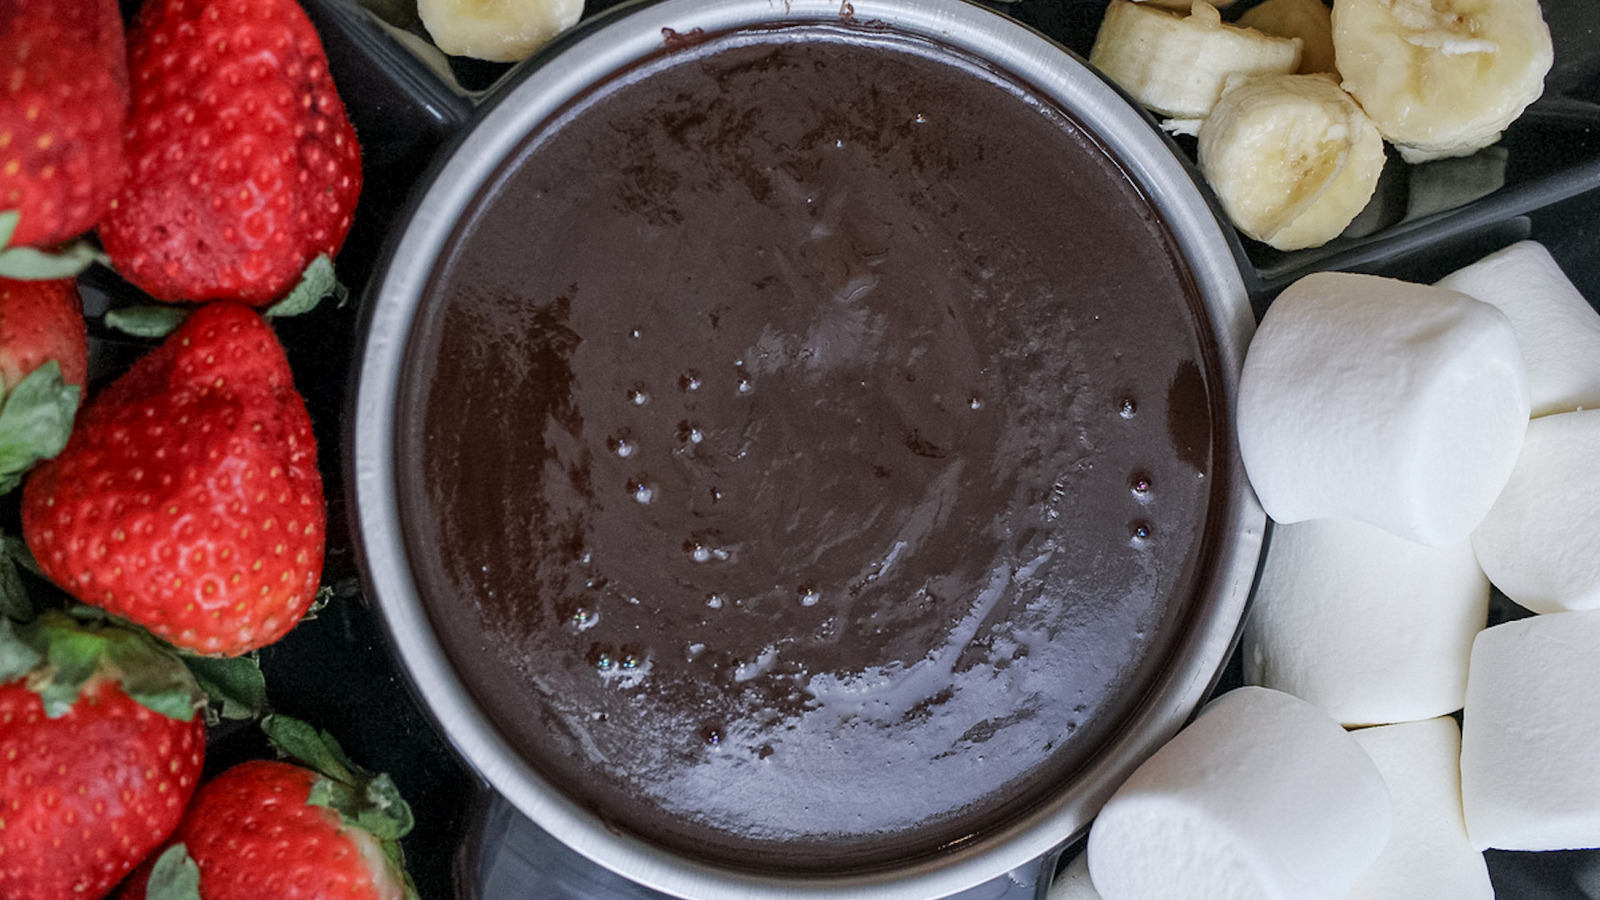 https://www.tastingtable.com/img/gallery/irish-cream-chocolate-fondue-recipe/l-intro-1668974115.jpg